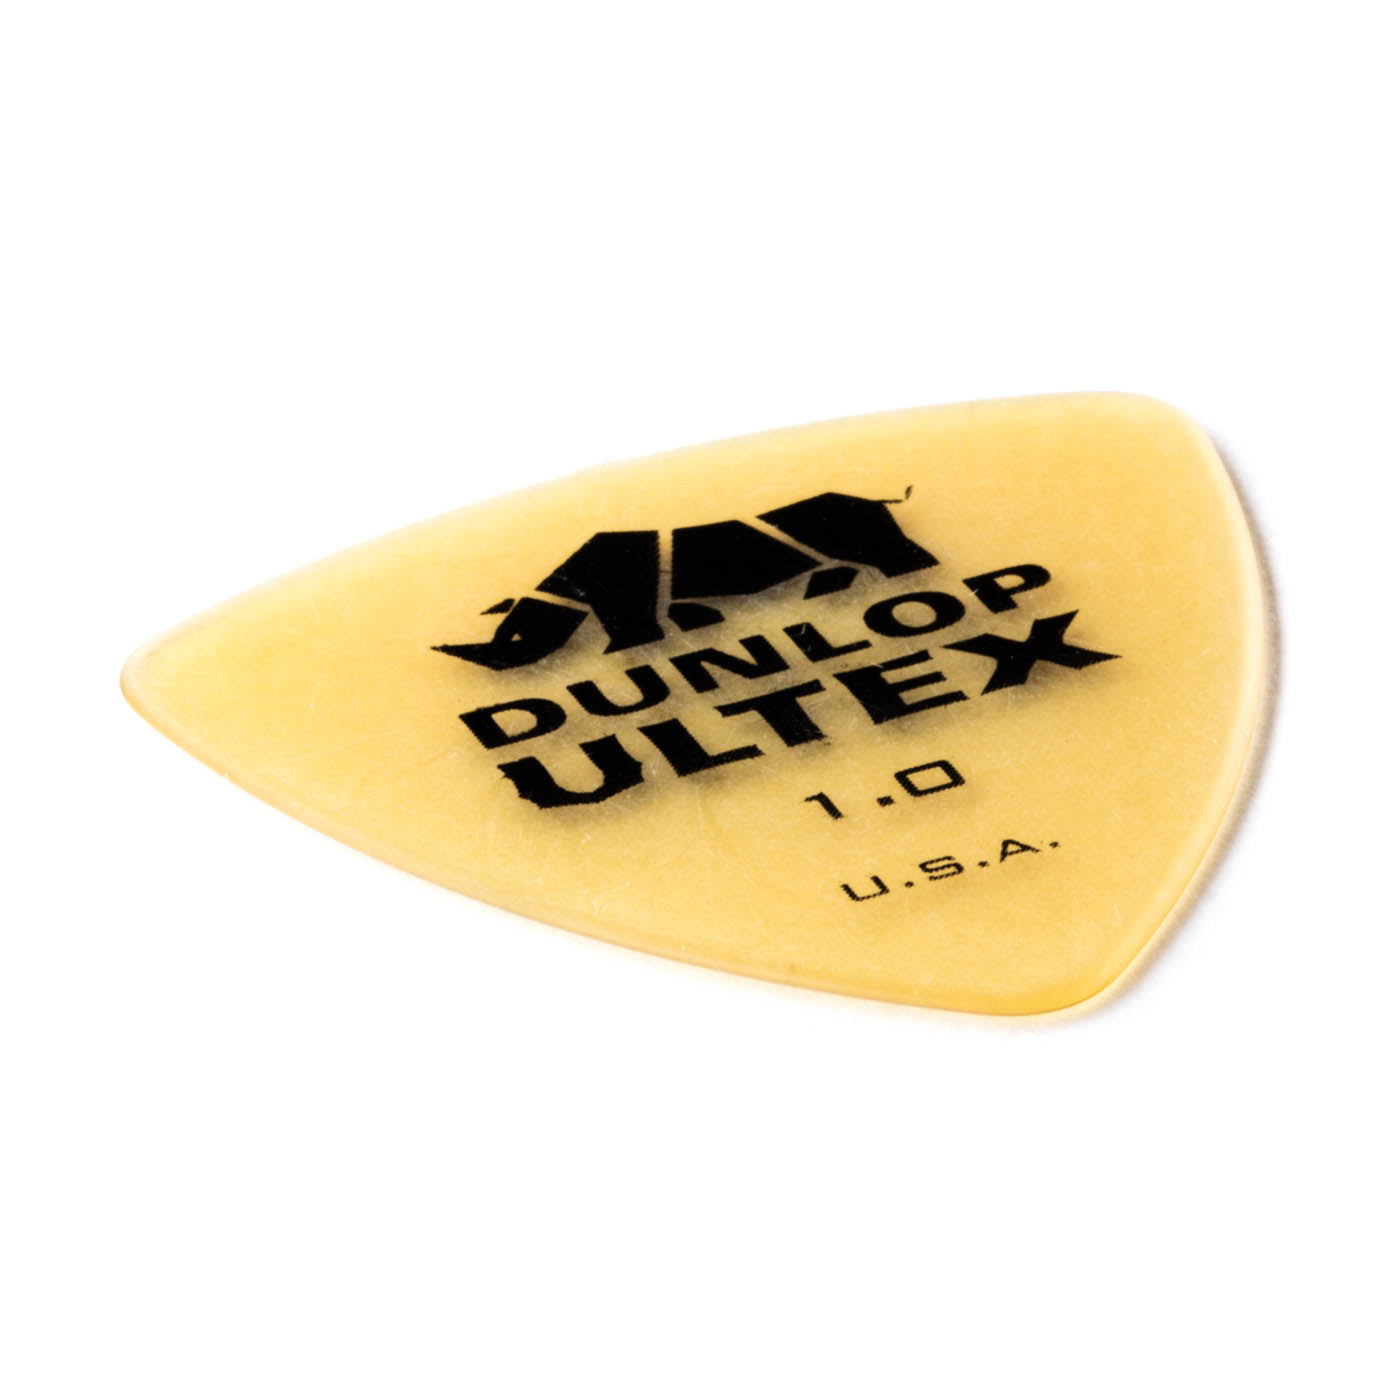 Dunlop 426 Ultex® Triangle Pick, 1.0MM